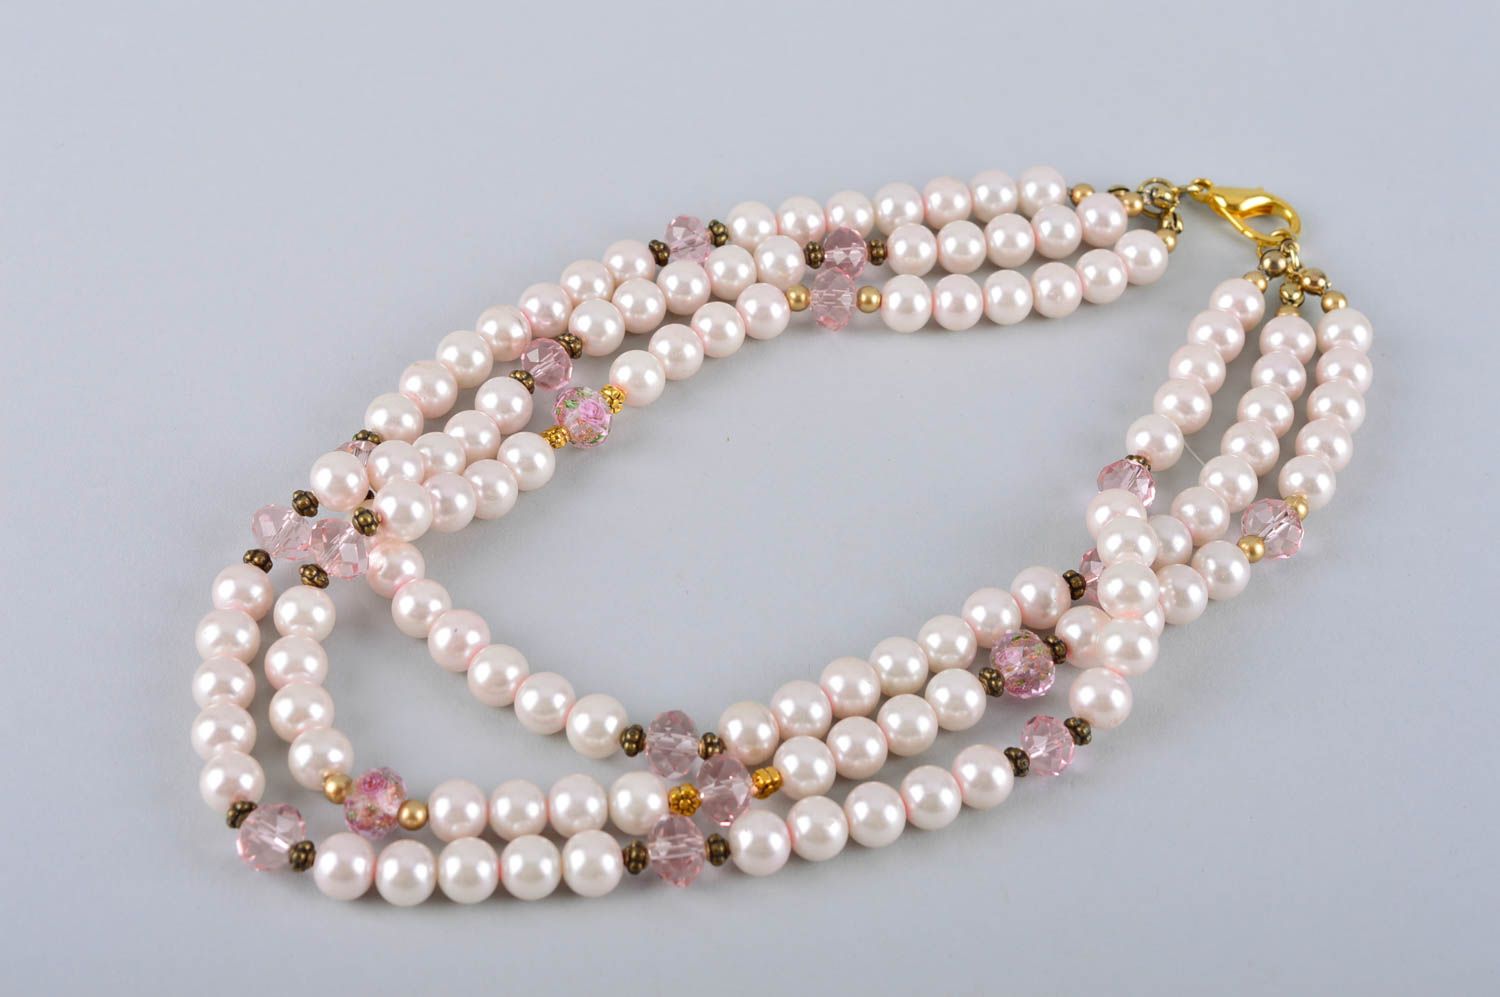 Handmade artificial pearls necklace unique designer jewelry accessory present photo 4